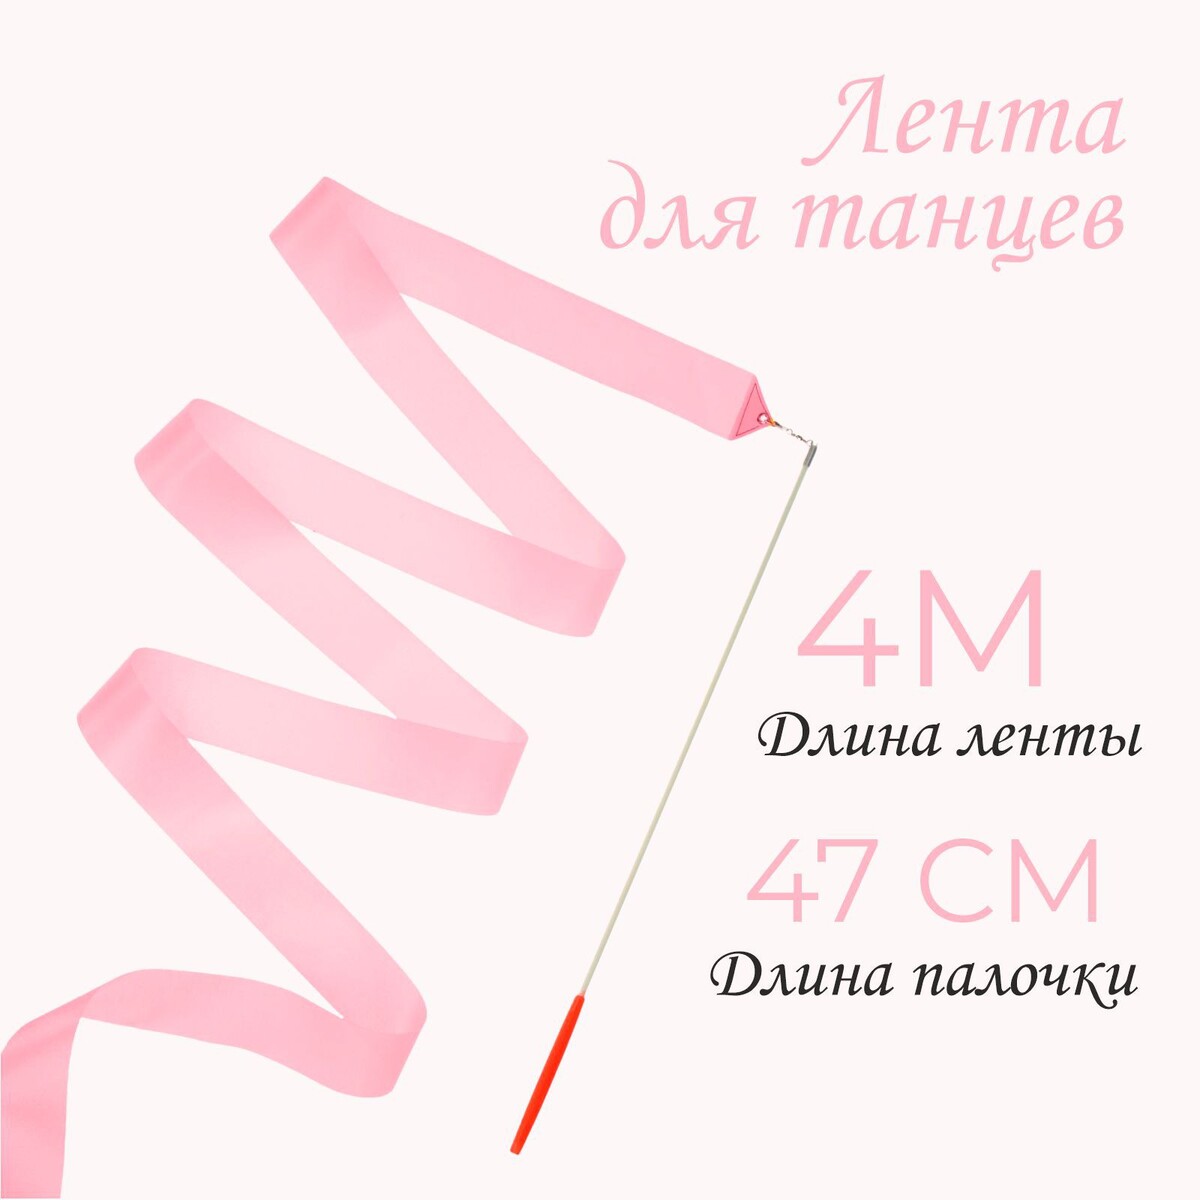 Лента для танцев, длина 4 м, цвет светло-розовый лента для танцев длина 4 м радужный